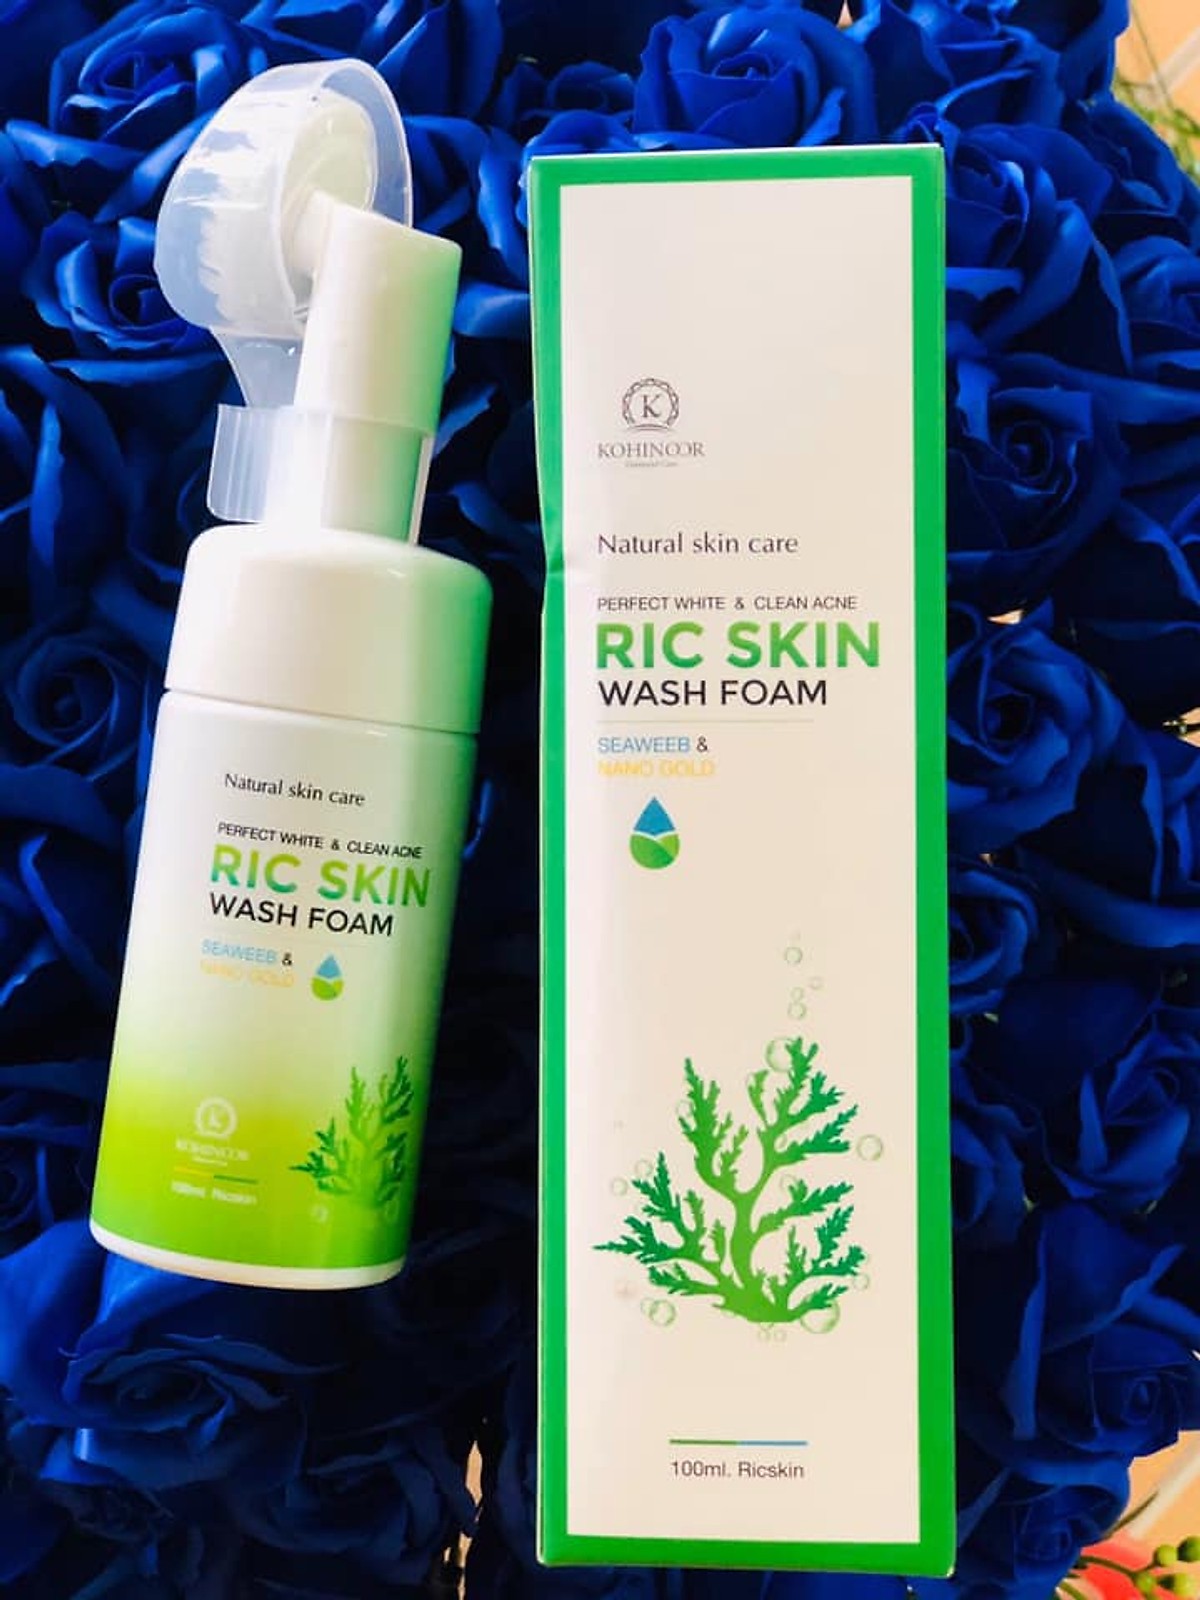 Combo Sữa Rửa mặt Ric Skin Wash Foam & Serum Ric Skin Serum HA+